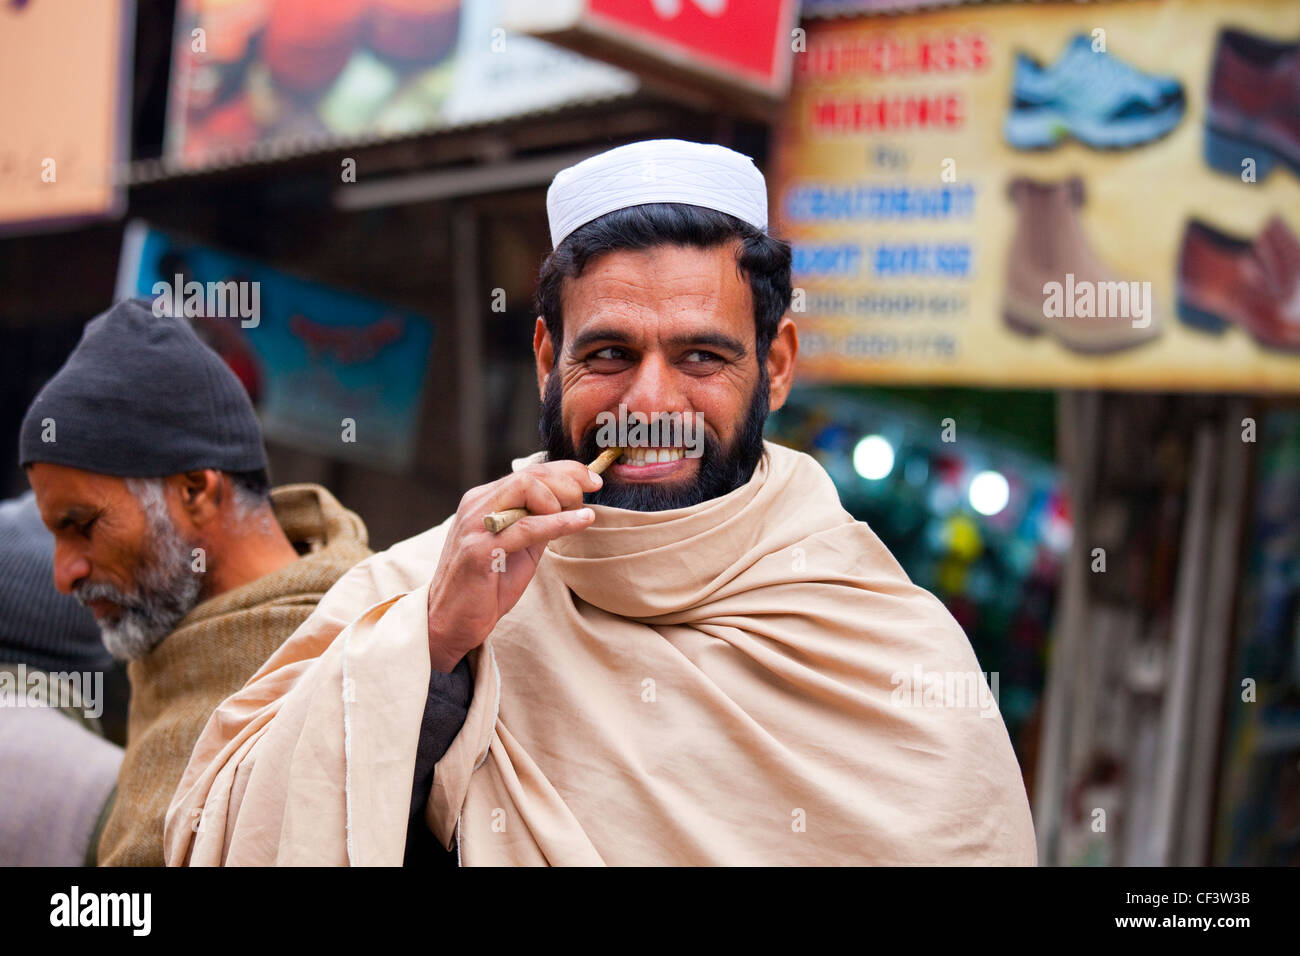 Masticar stick, madera, Islamabad, Pakistán tooghbrush Foto de stock